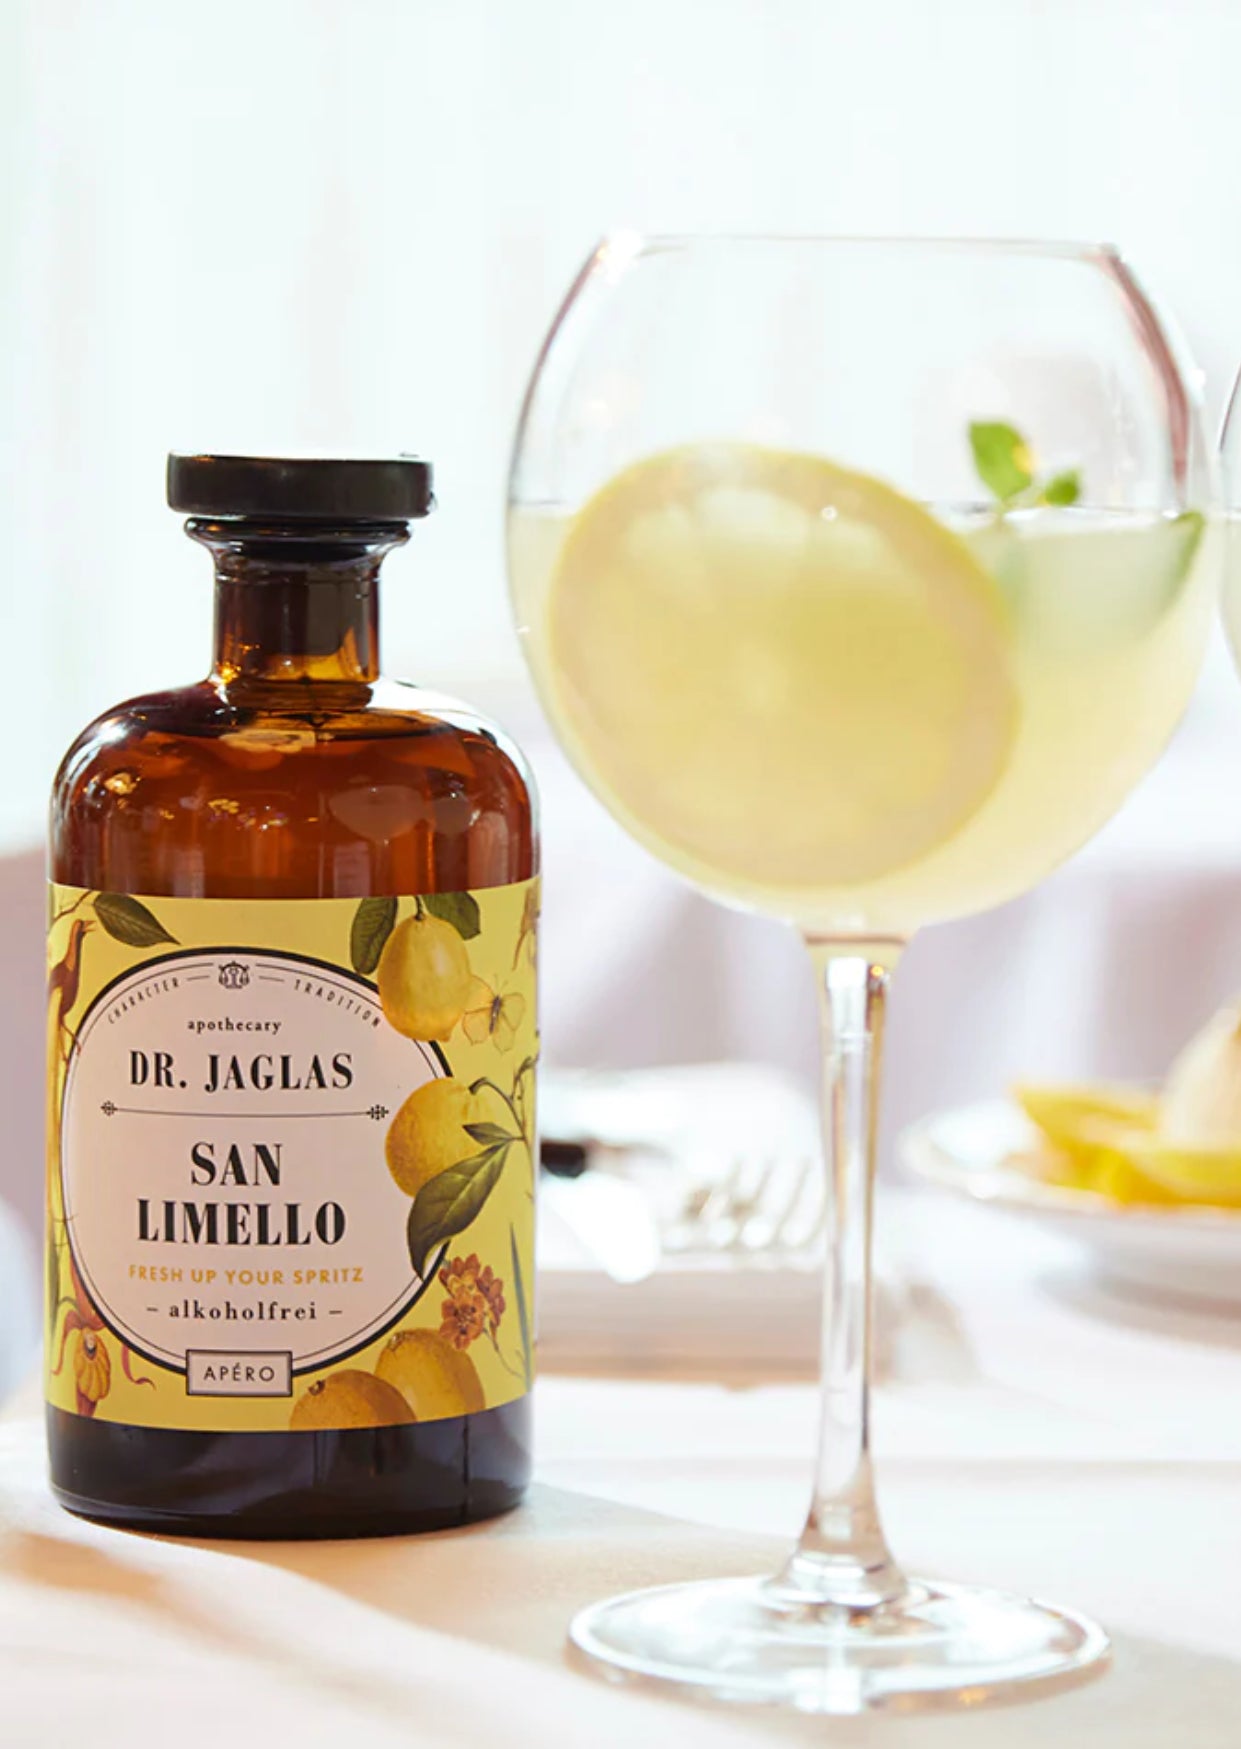 Dr. Jaglas San Limello alkoholfreier Aperitif 500ml